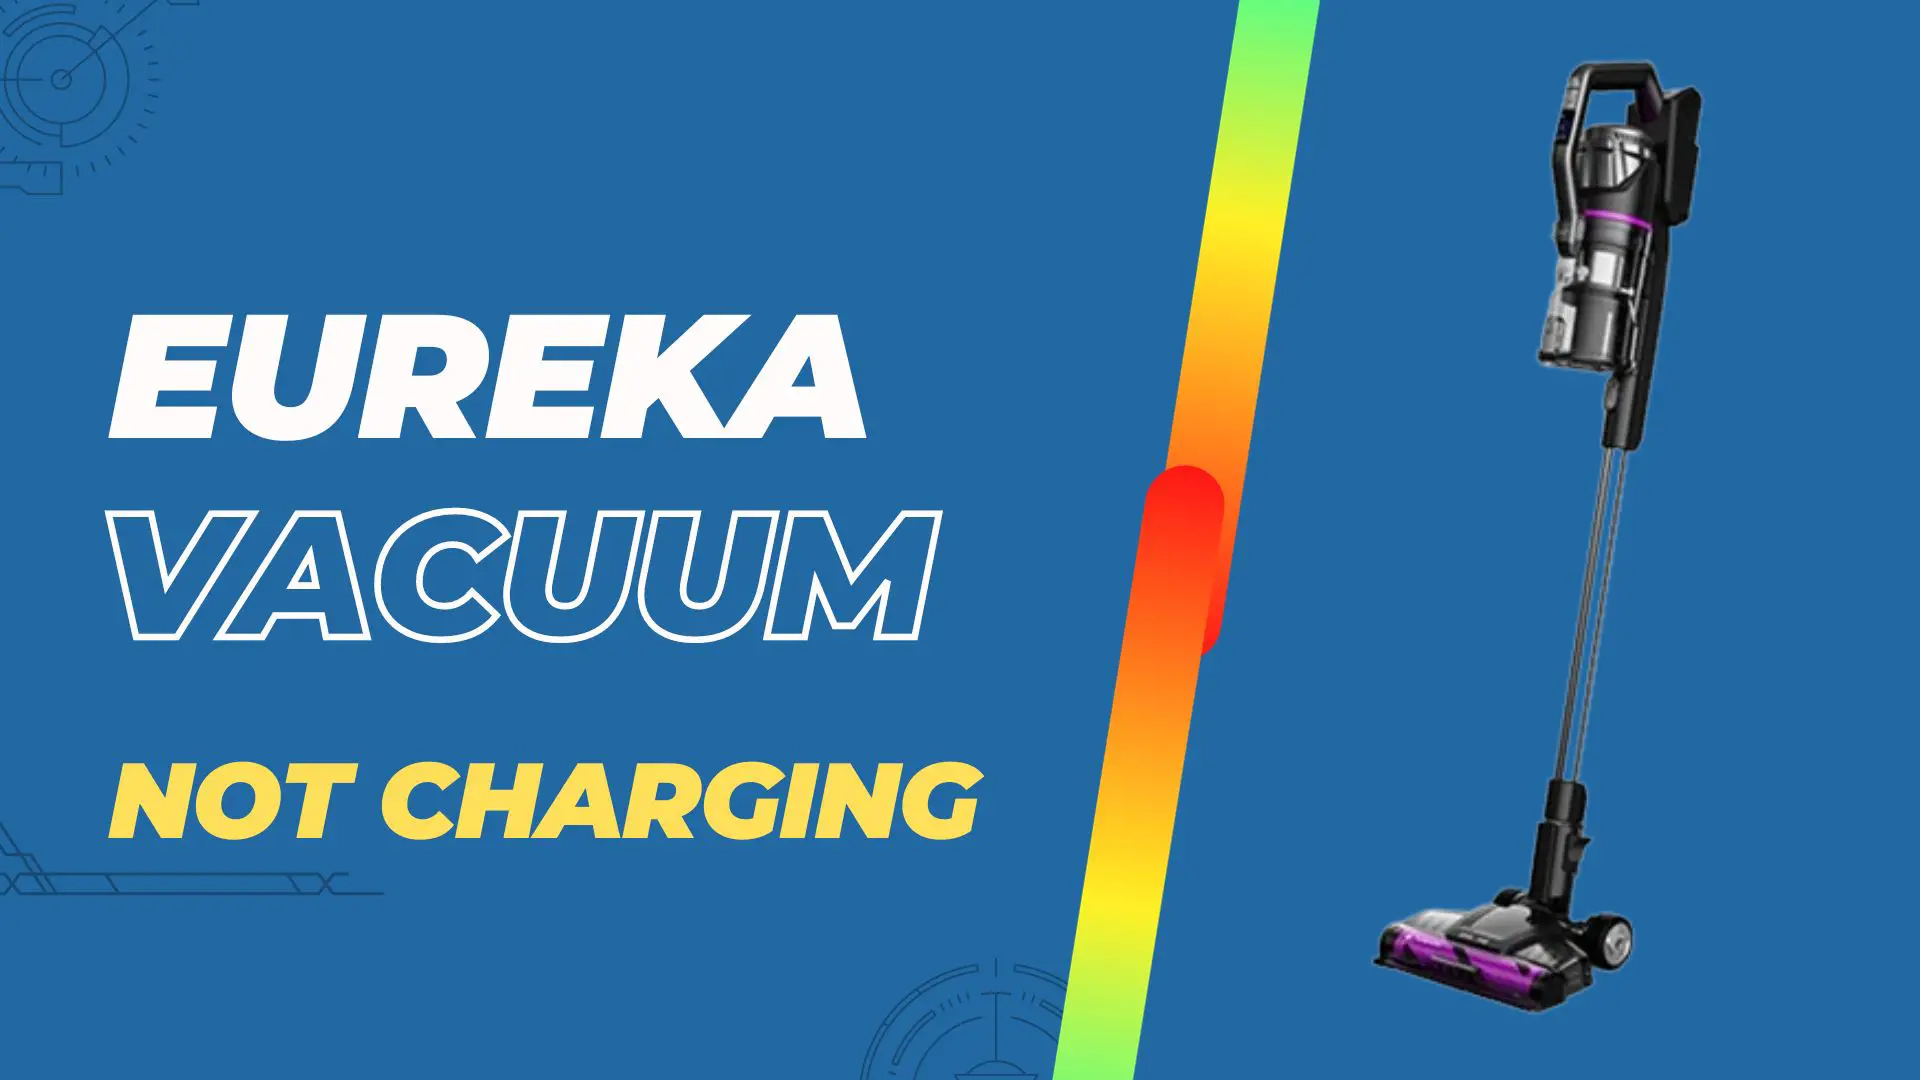 eureka cordless vacuum not charging